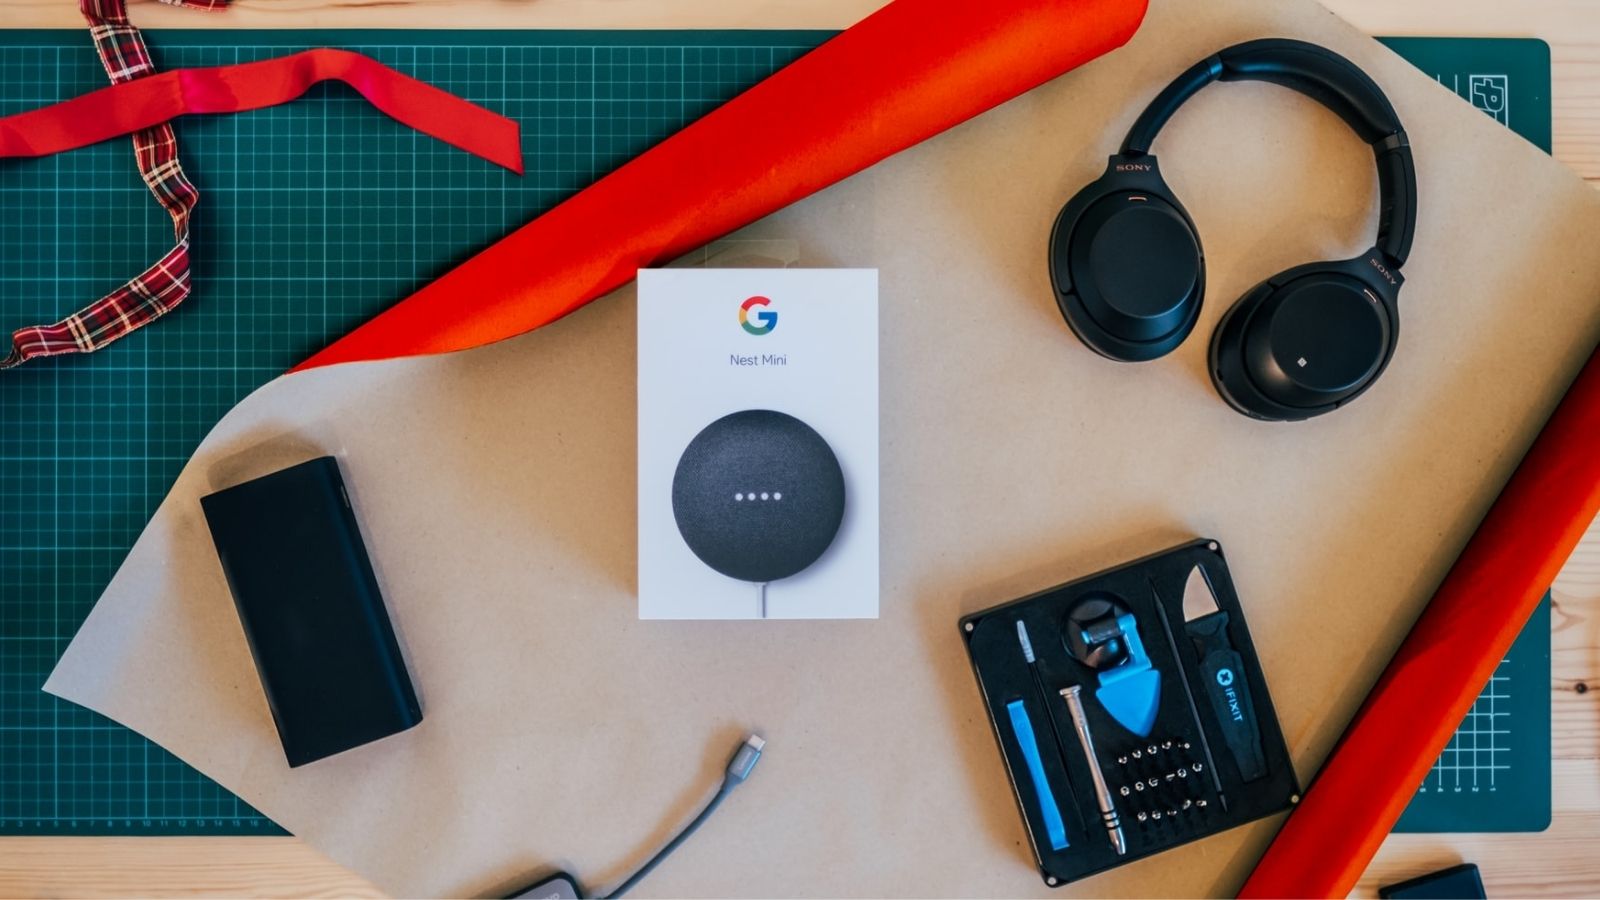 Google Nest Mini And Gadgets